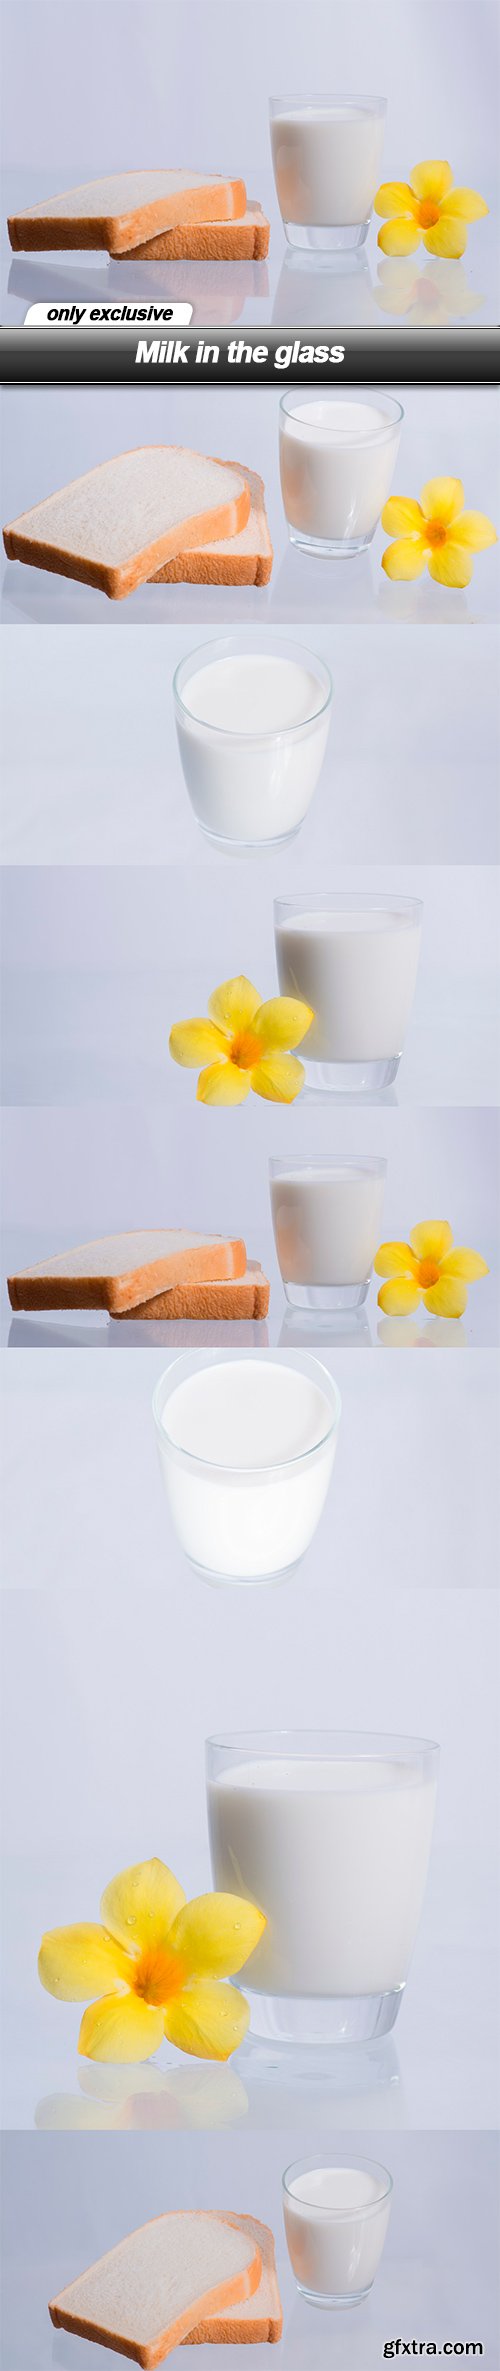 Milk in the glass - 7 UHQ JPEG